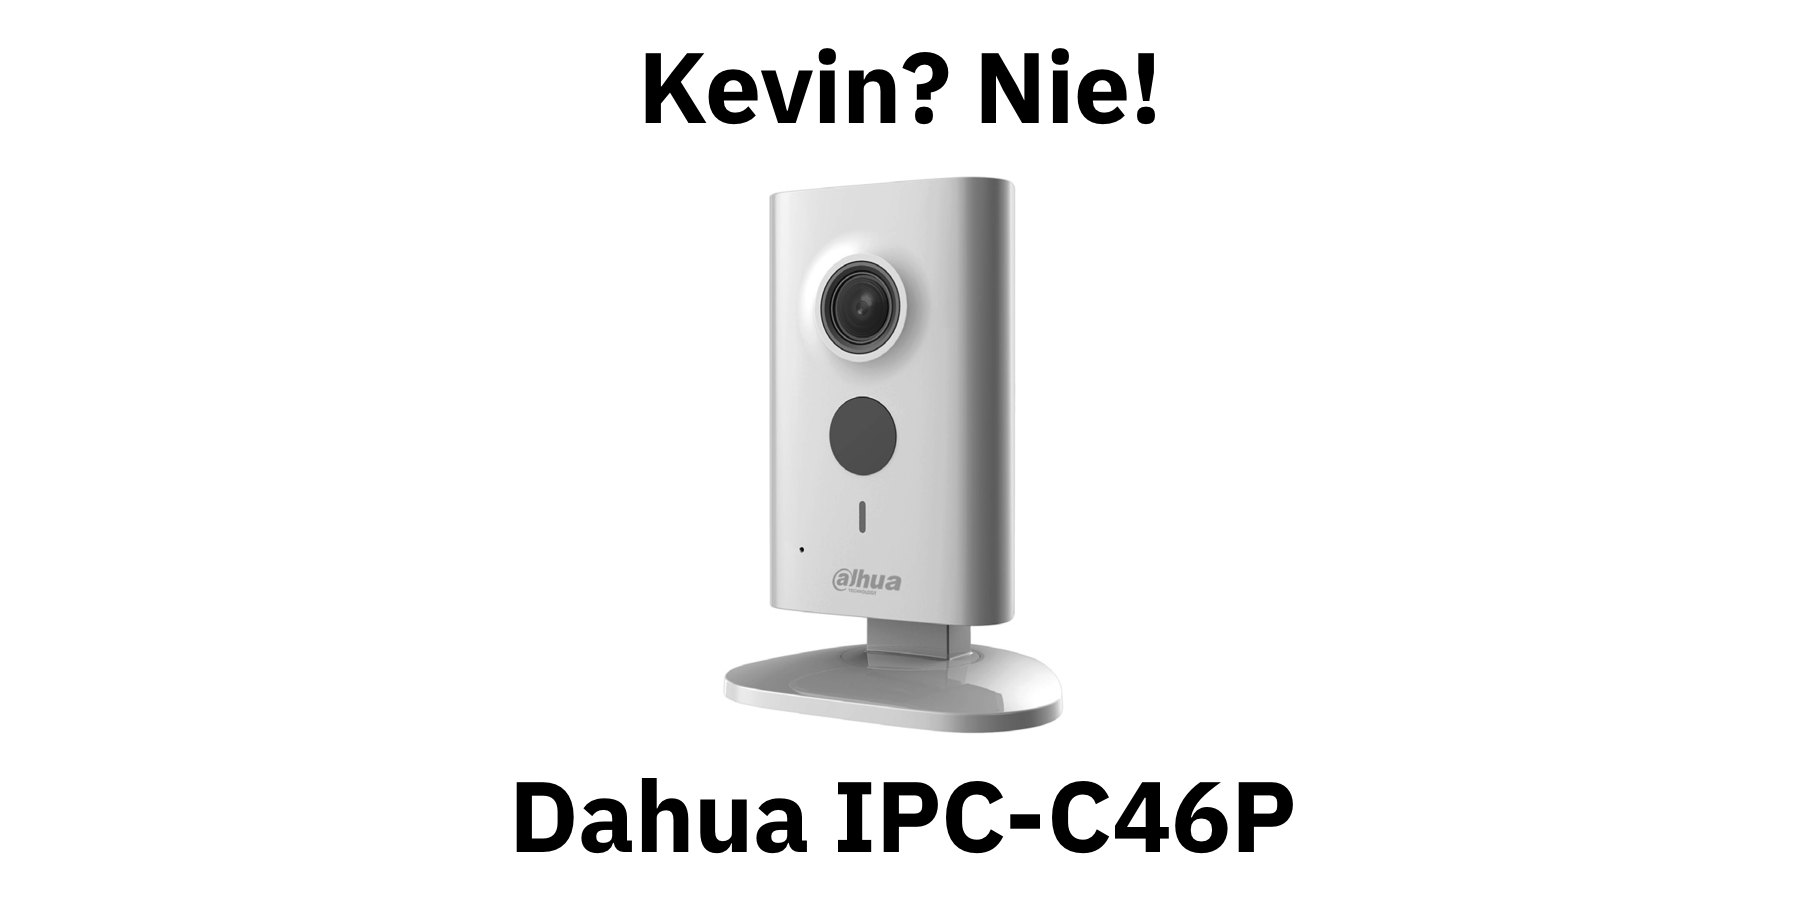 Dahua IPC-C46P zamiast Kevina, czyli monitoring IP